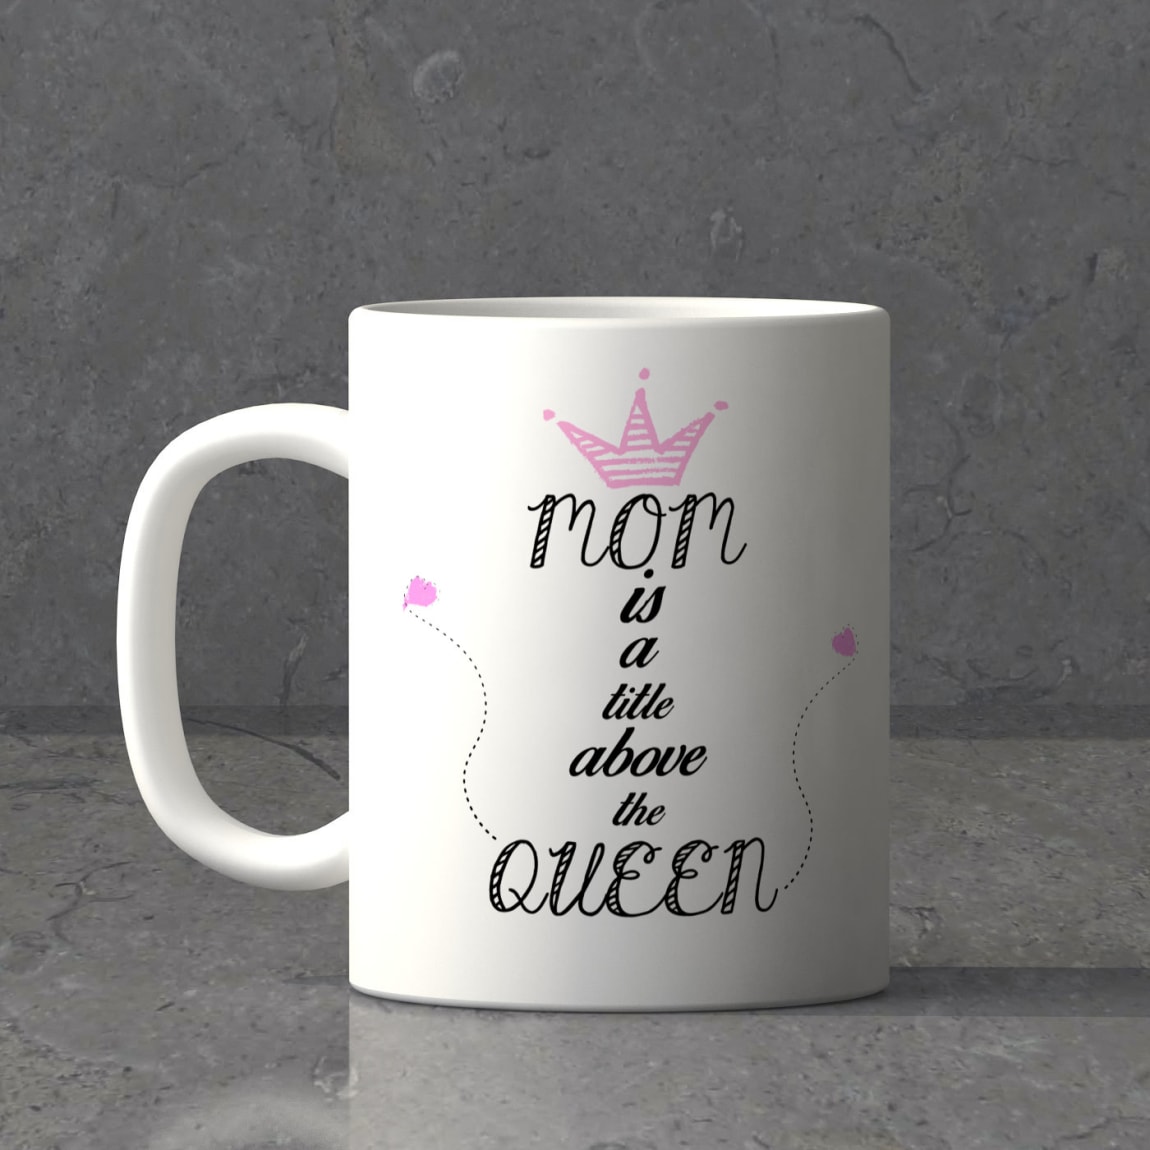 Personalized Mug Print for Mom